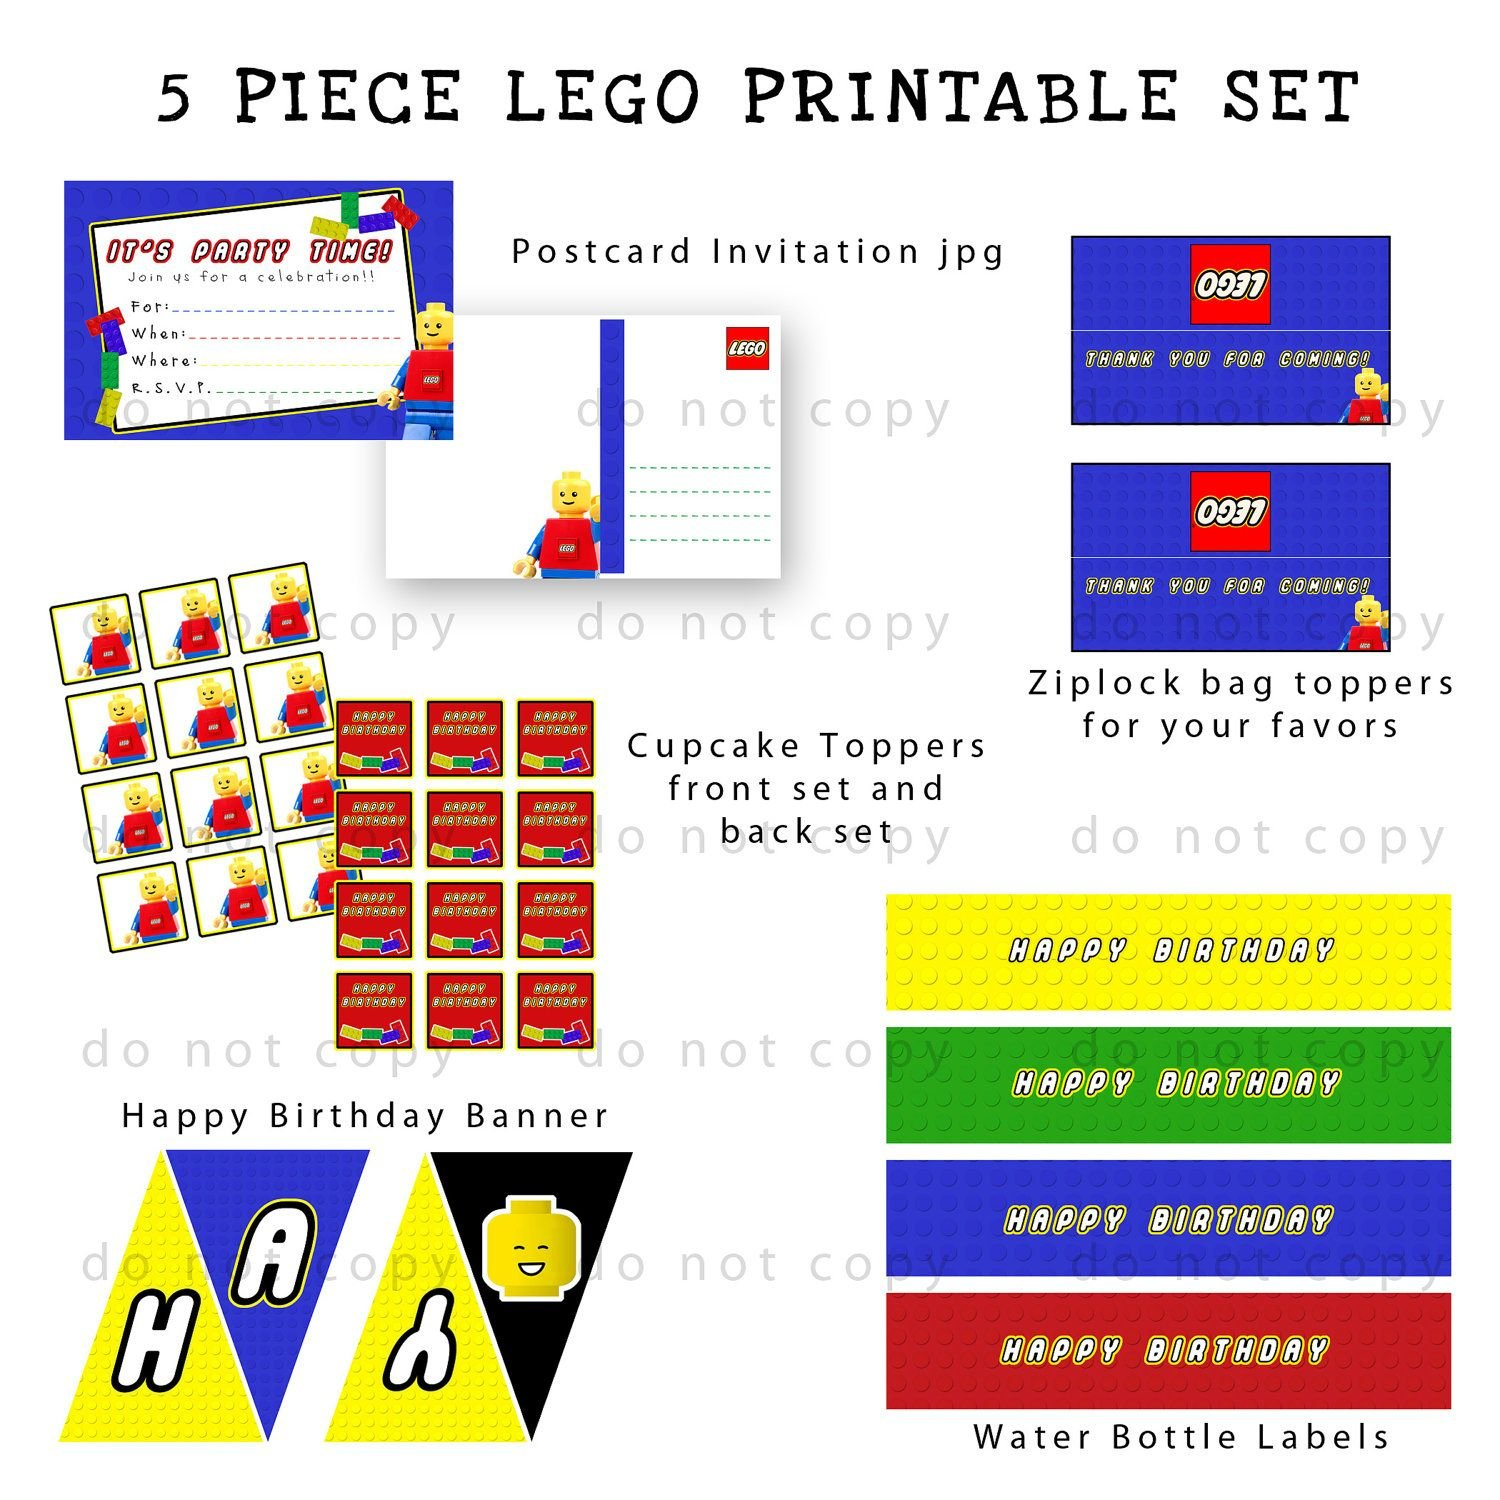 Invitation. Lego Party Invitations Printable Free - Cybersilva - Lego Party Invitations Printable Free